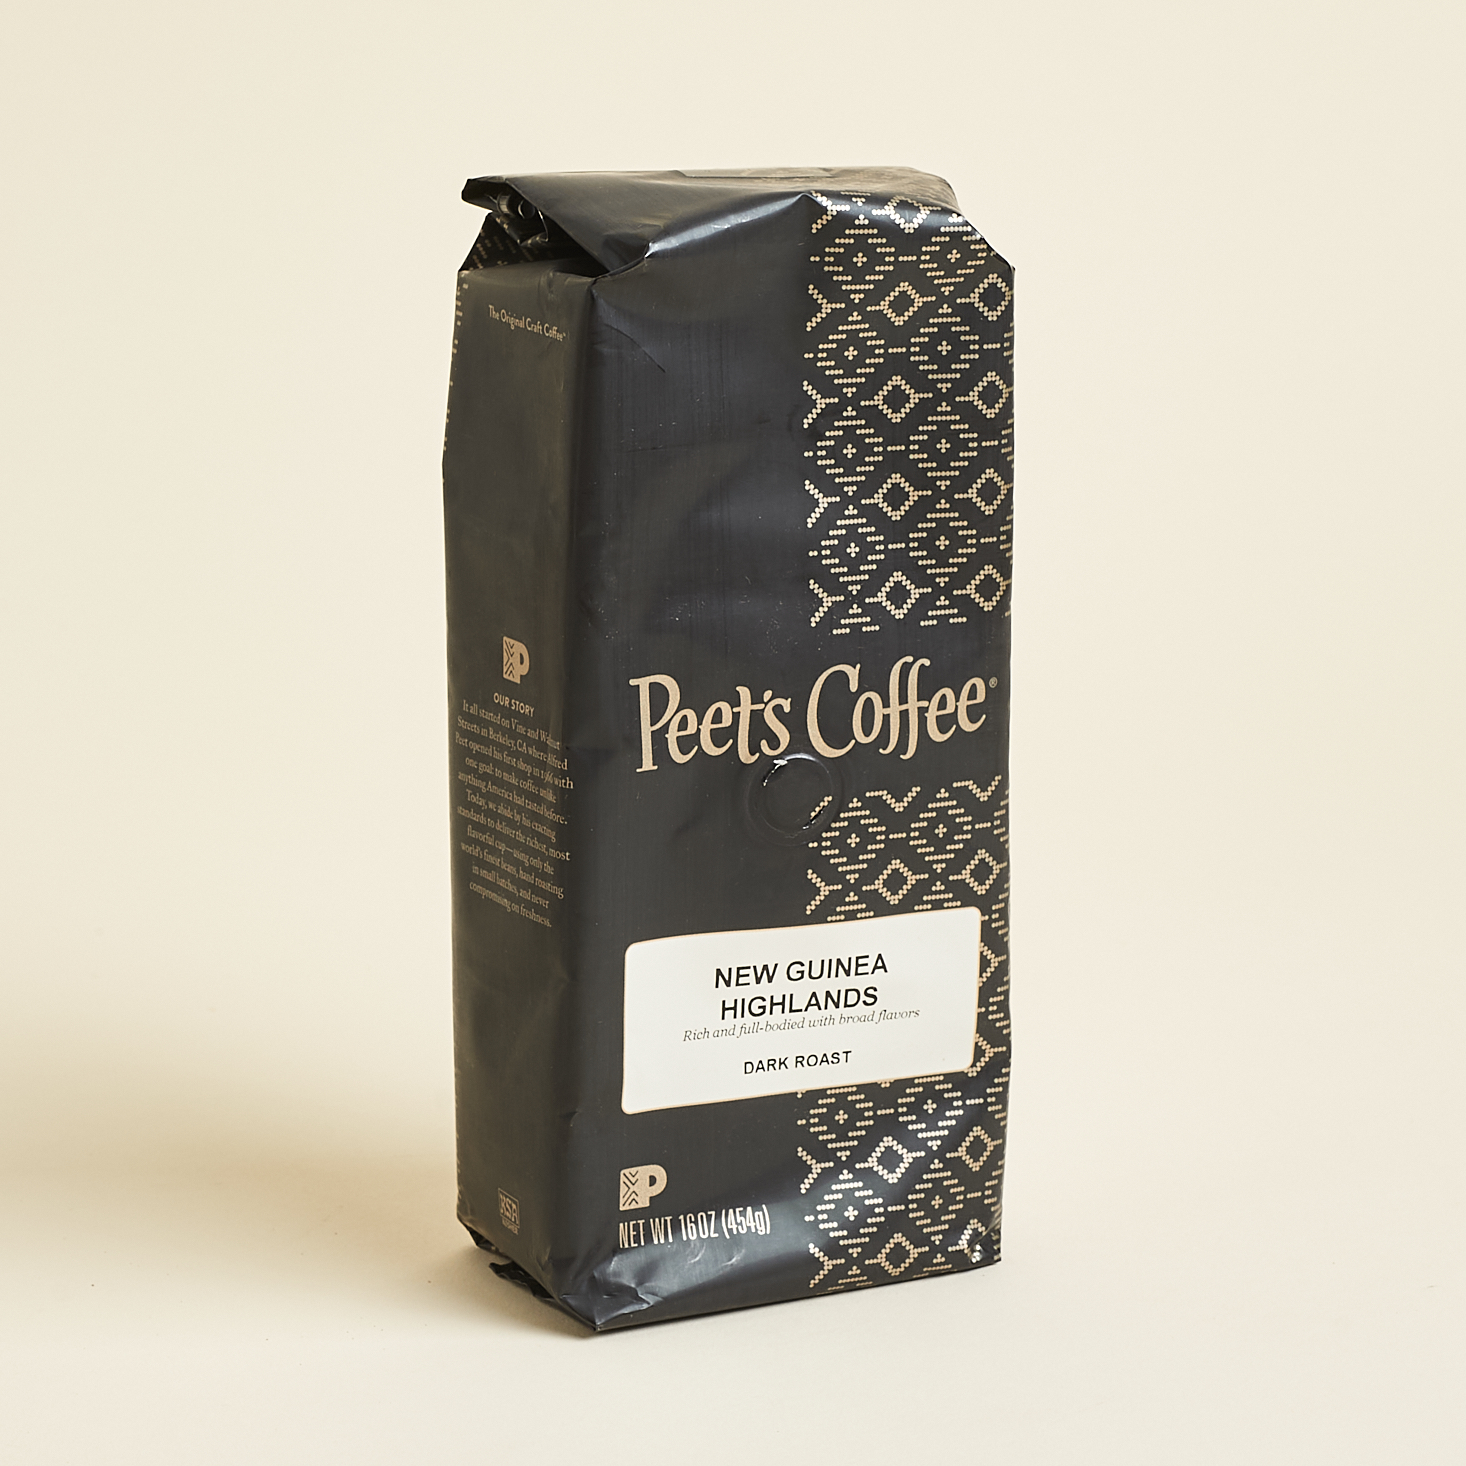 Peets Coffee New Guinea Highland Single Origin bag